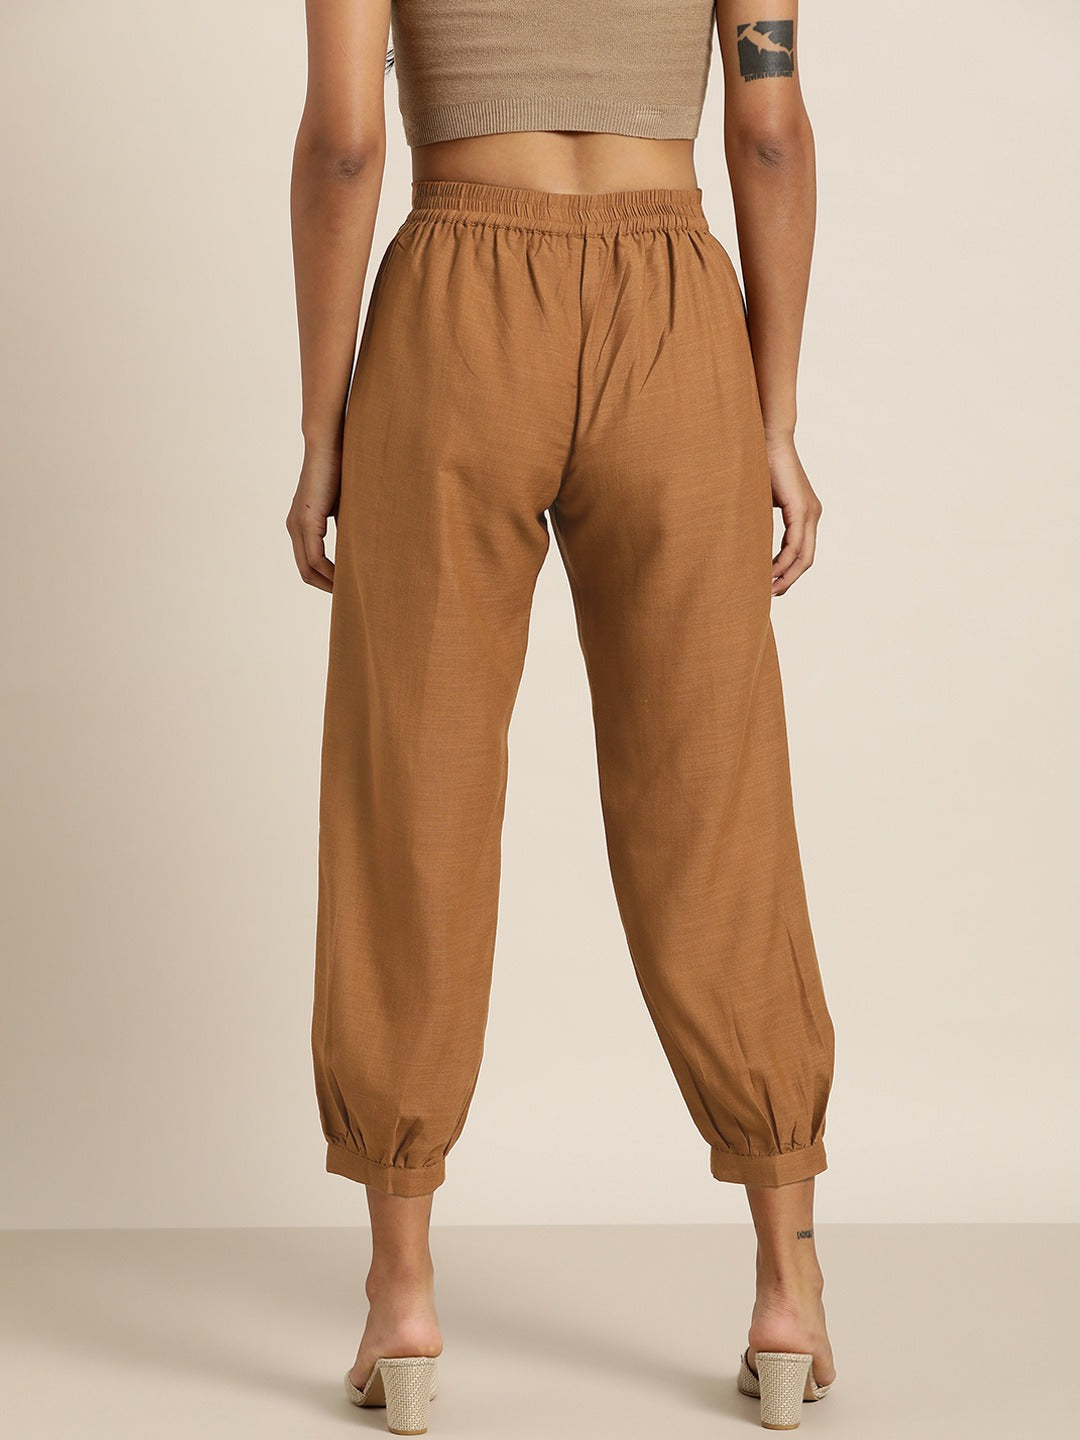 Buy Khaki Trousers  Pants for Men by Defacto Online  Ajiocom